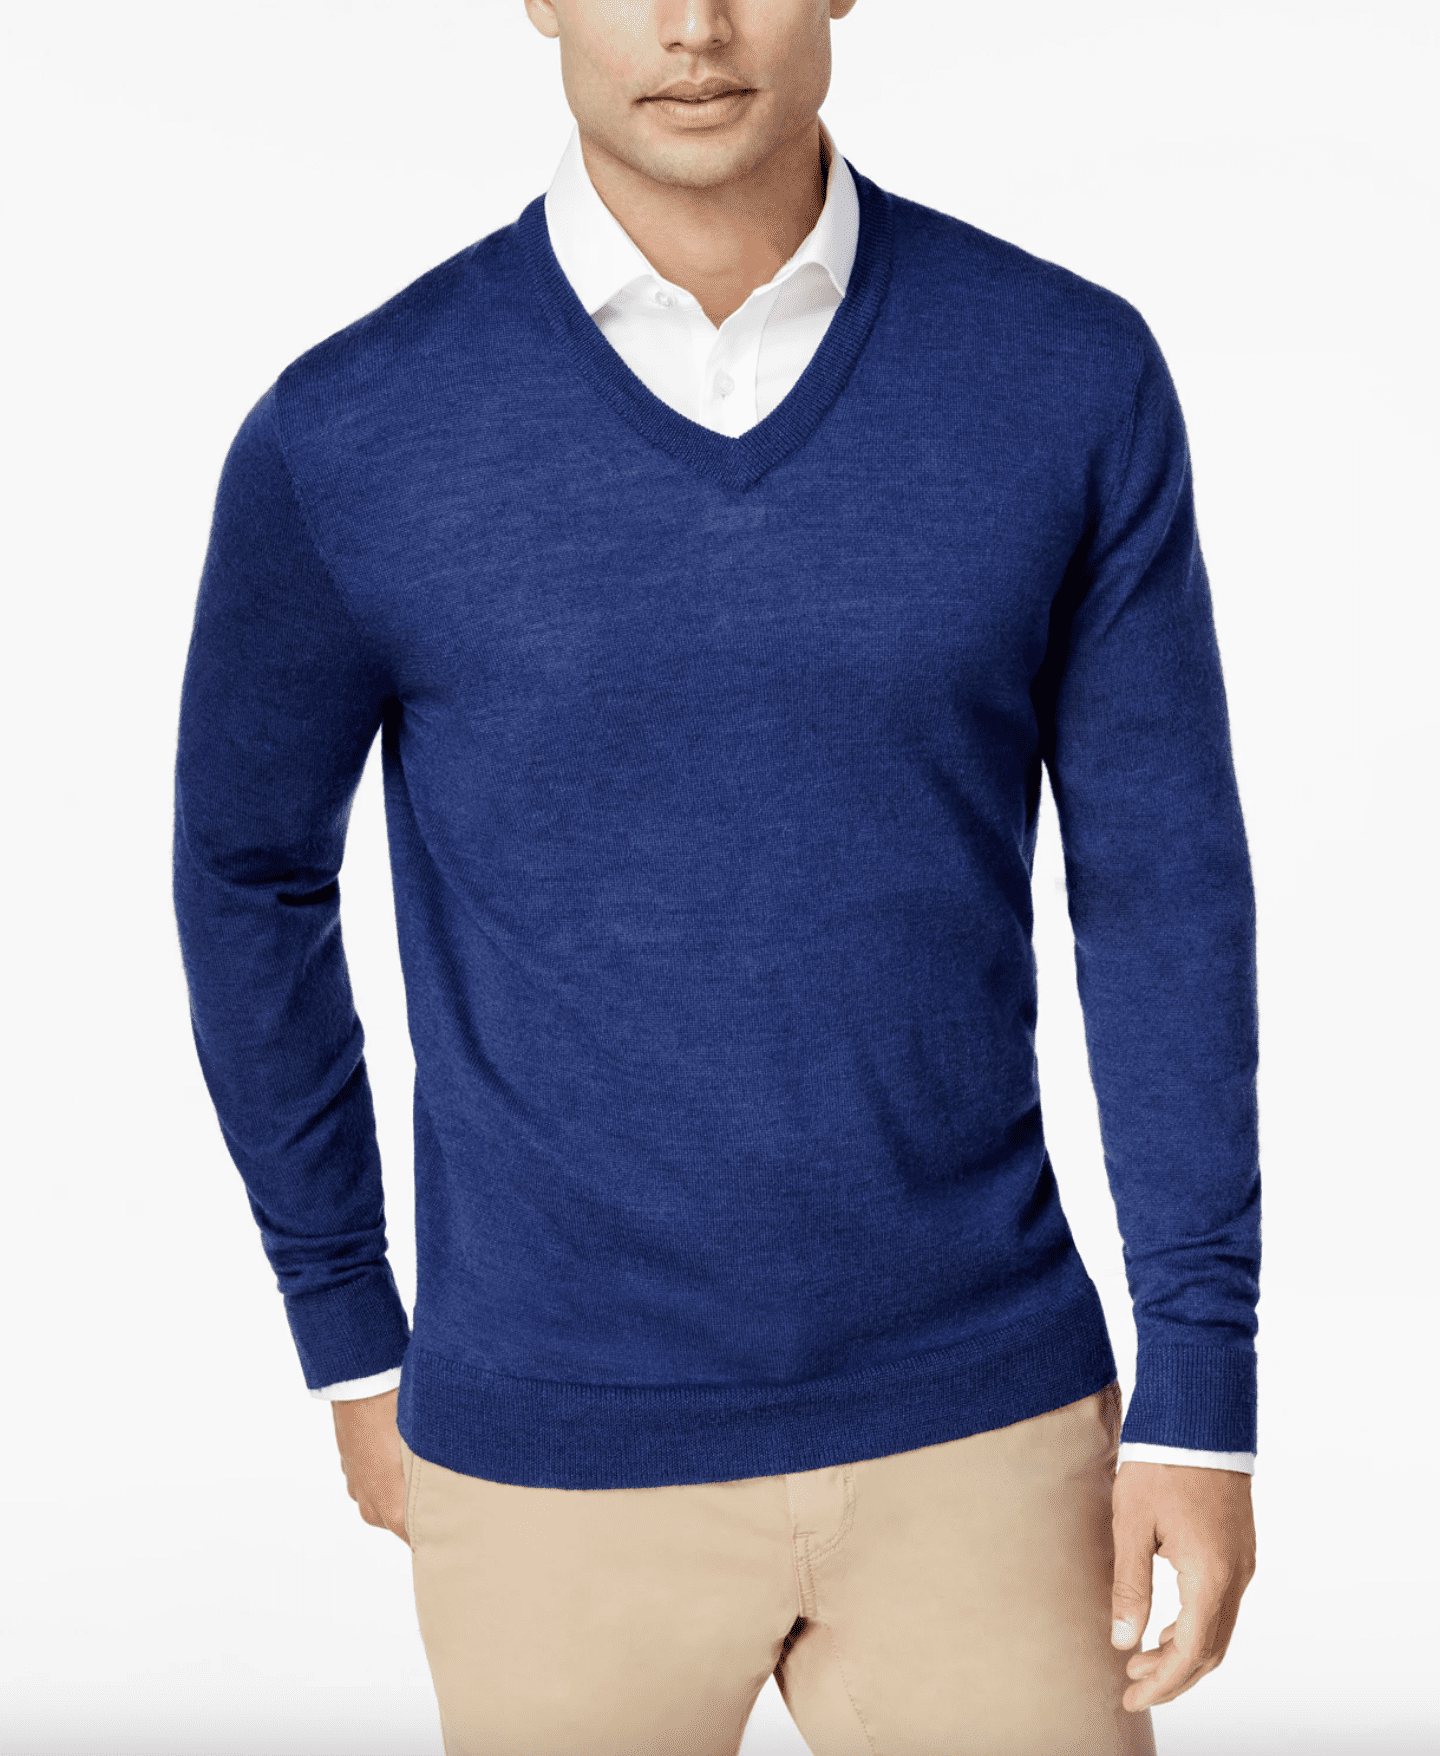 Club Room Men's Solid V-Neck Merino Wool Blend Sweater – Dark Blue